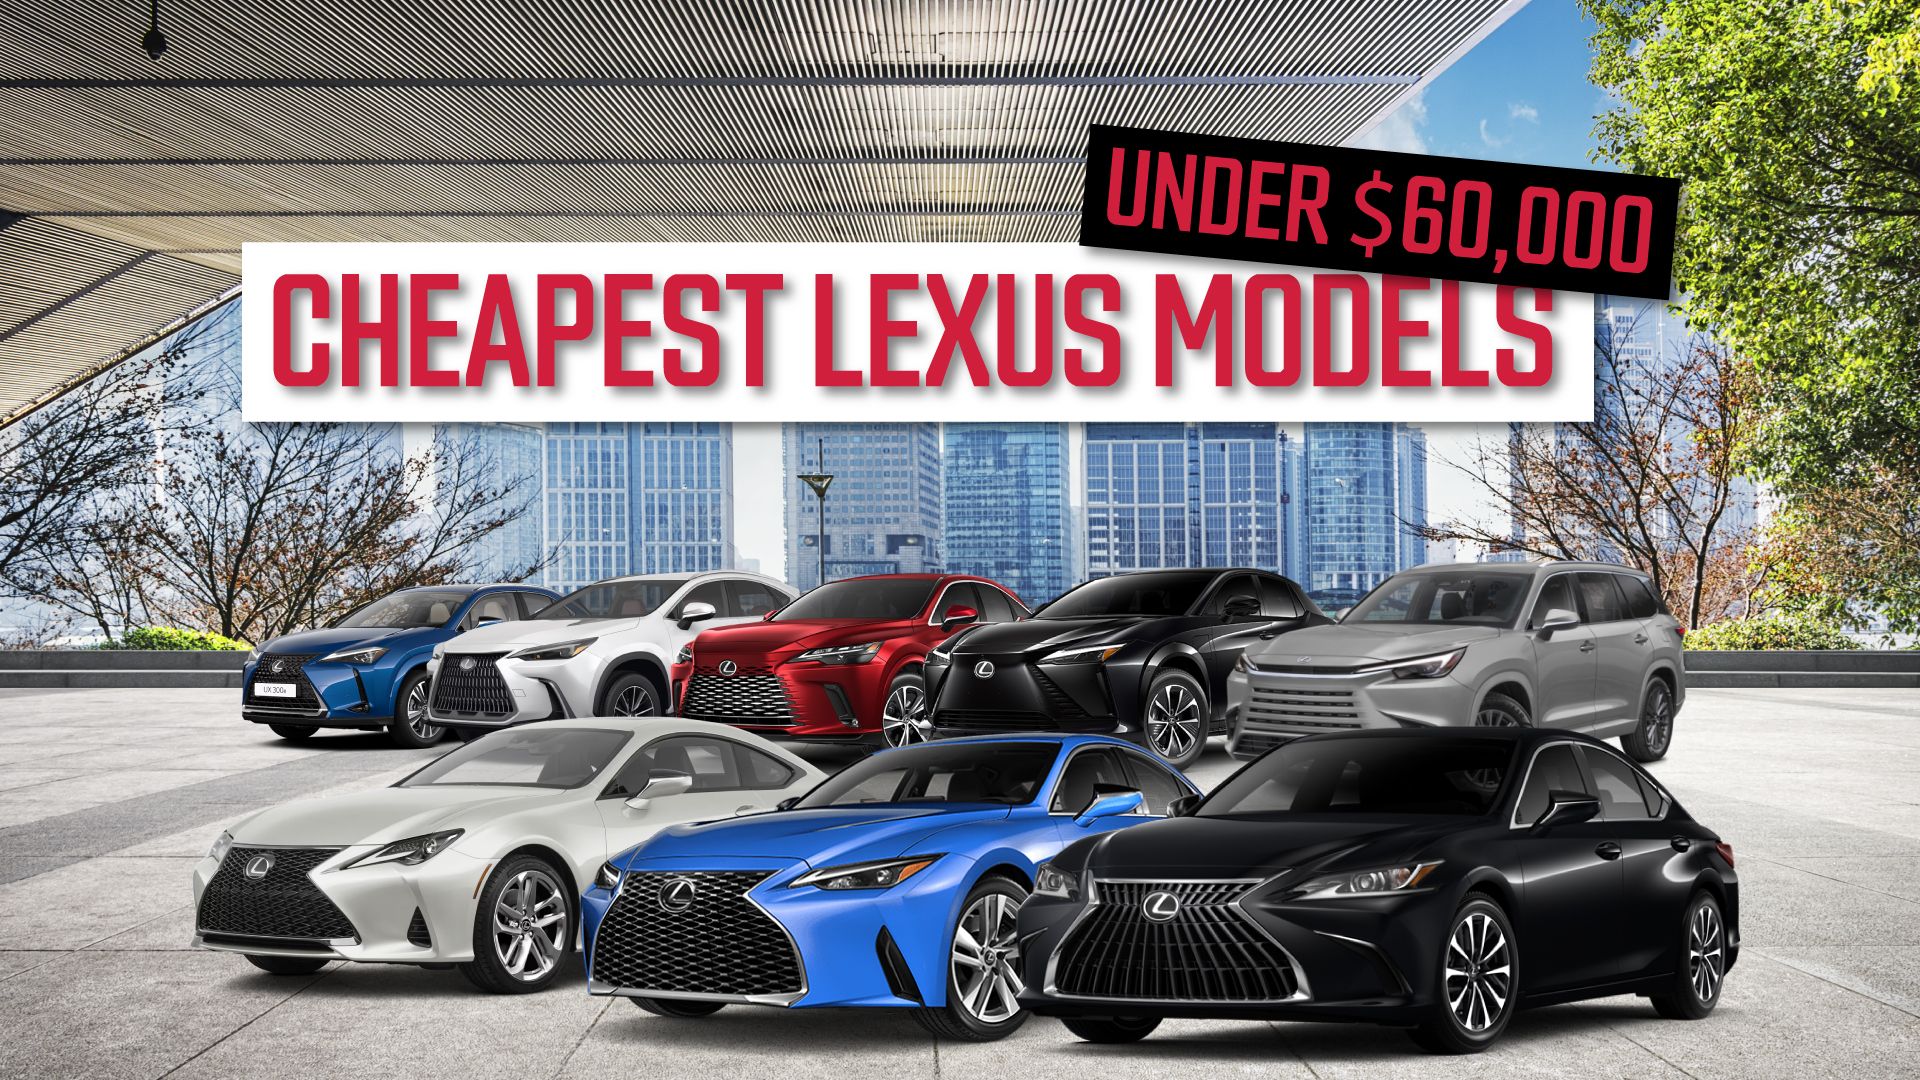 Cheapest-Lexus-Models-Under-$60,000